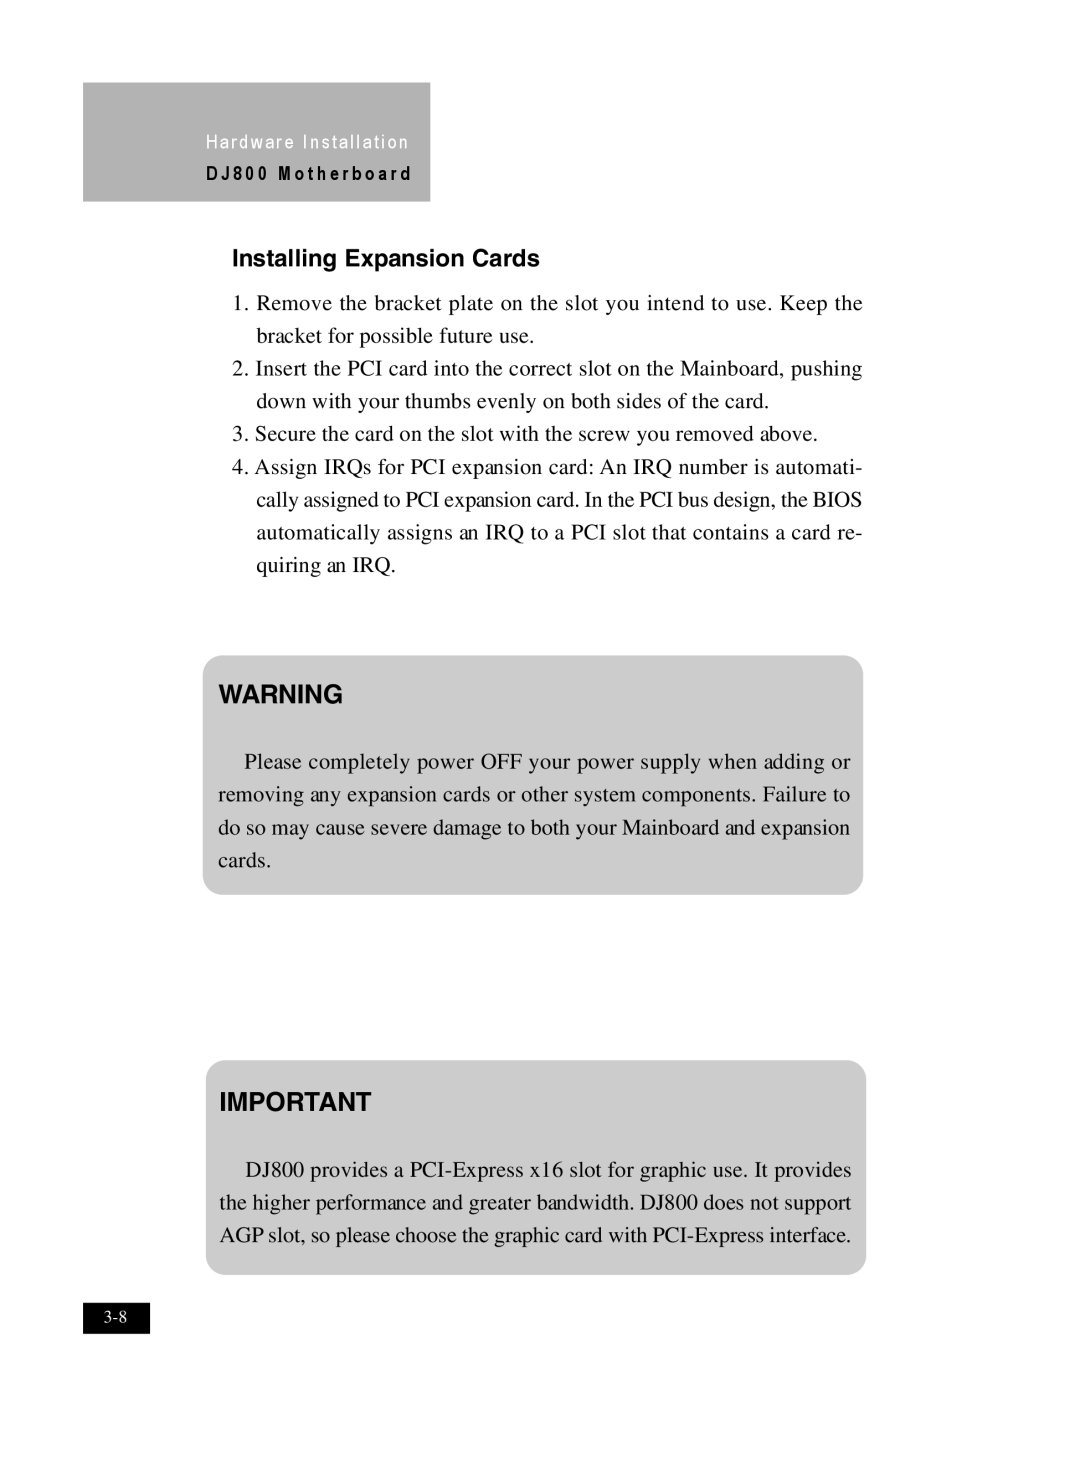 IBM DJ800 user manual Installing Expansion Cards 